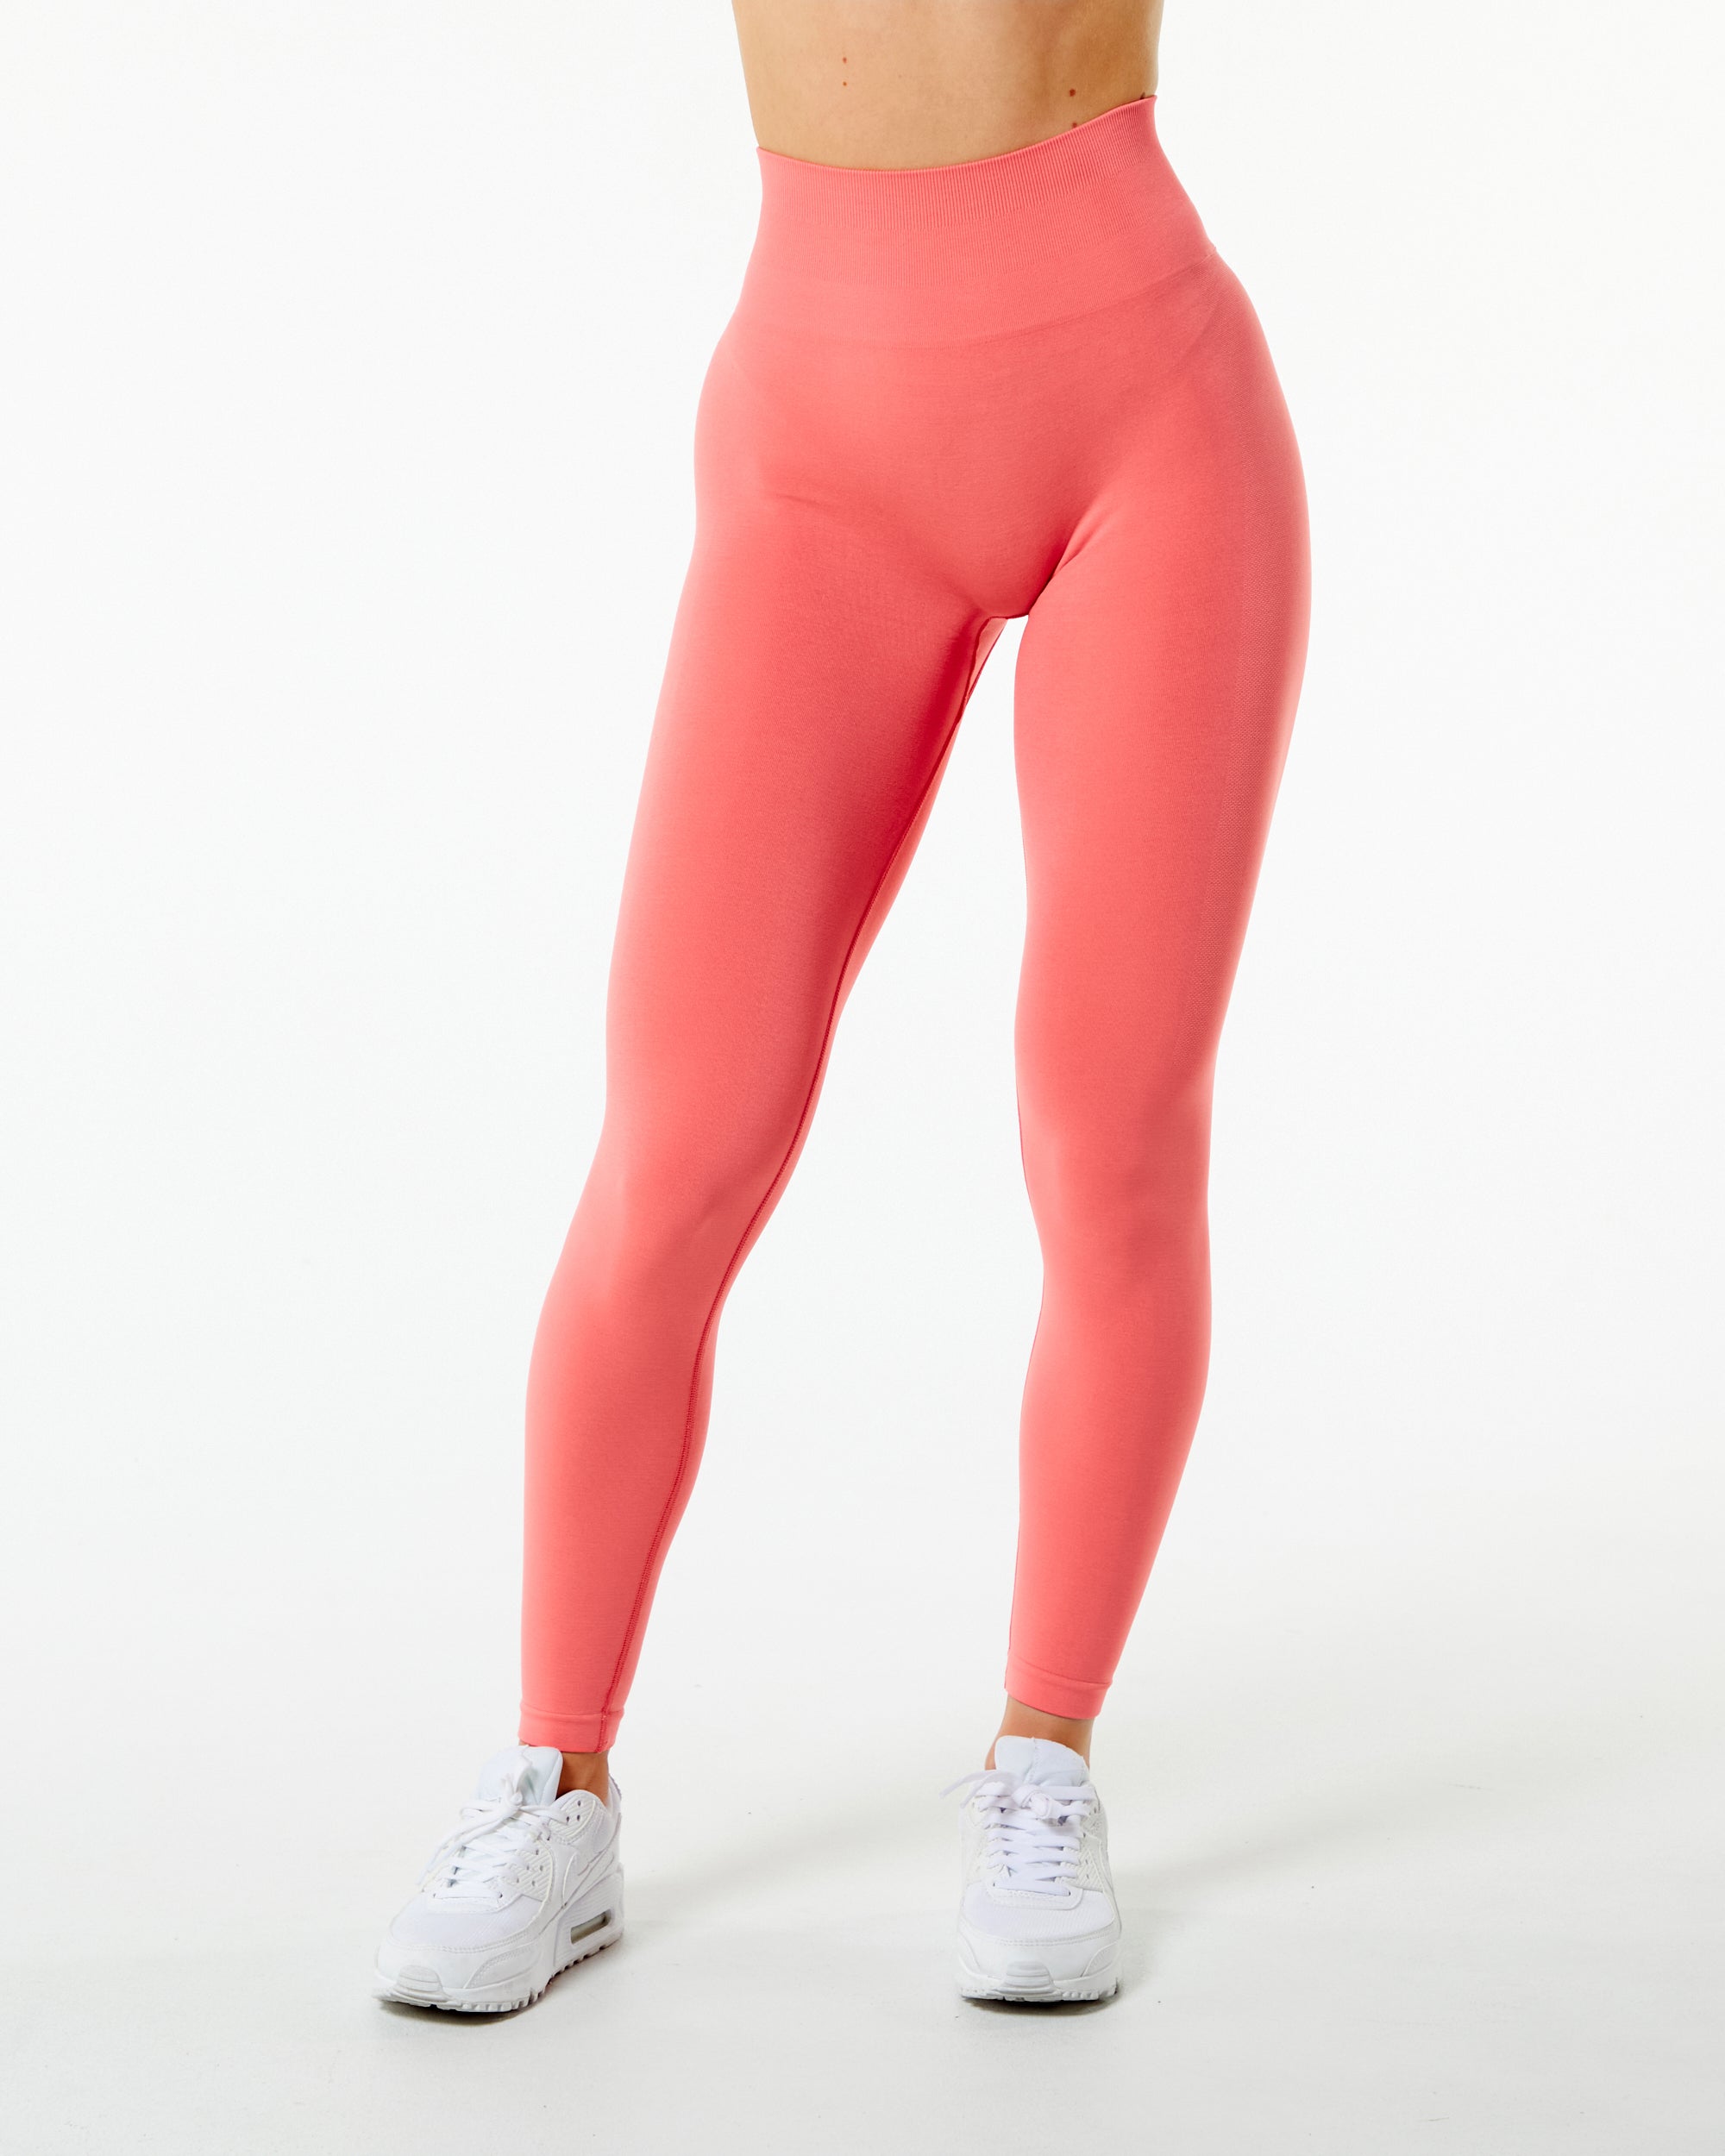 Alphalete Amplify Legging - Athletic apparel